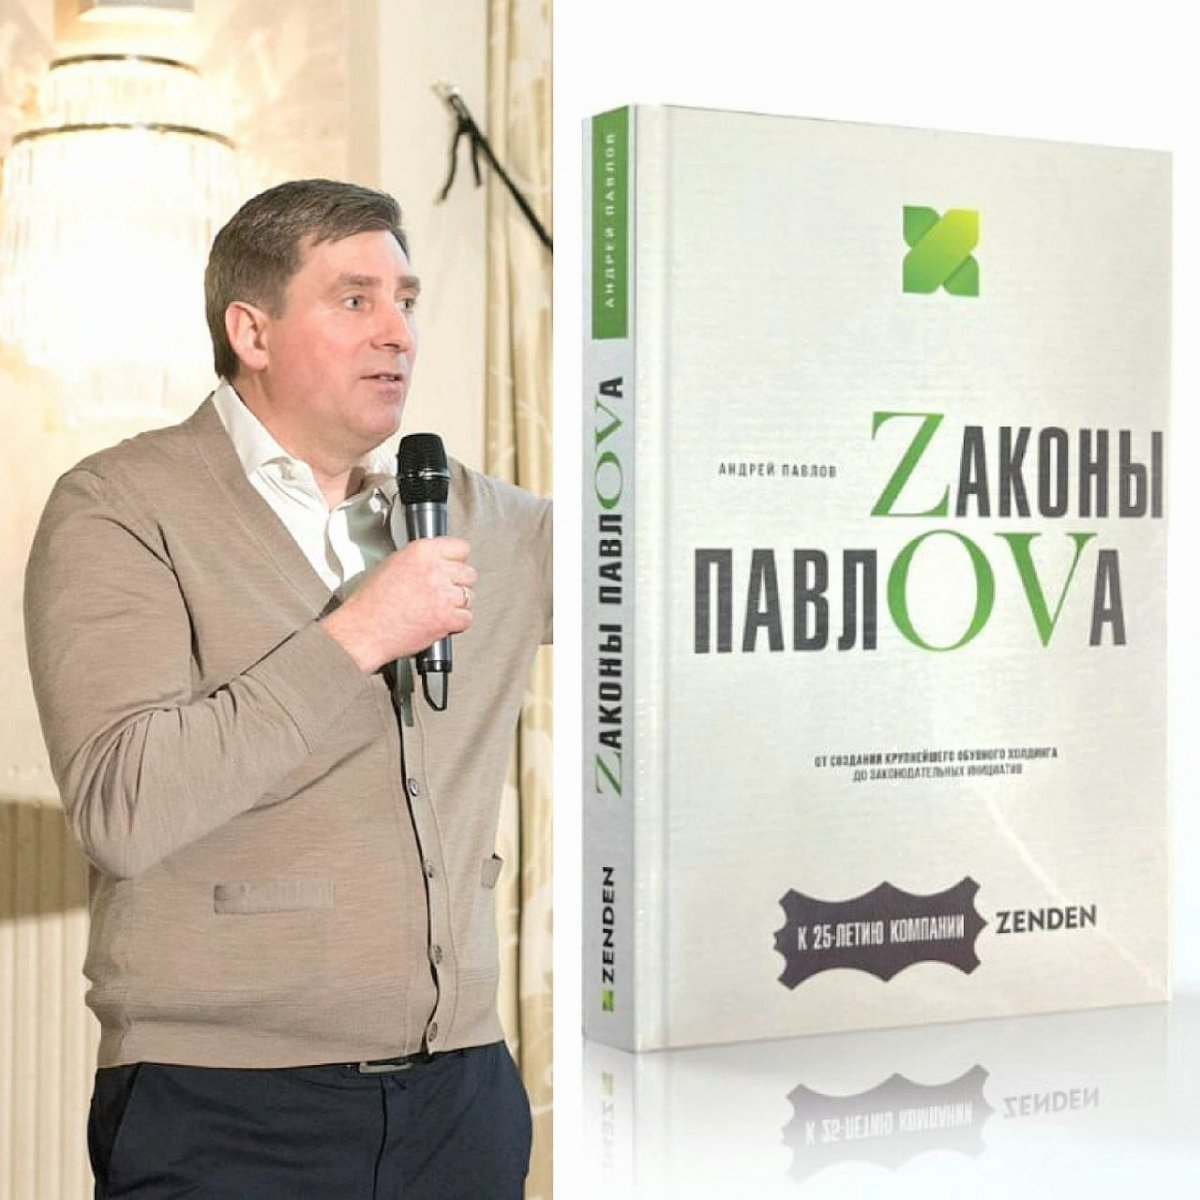  Эксперты и читатели обсуждают книгу Андрея Павлова «Zаконы ПавлOVа»